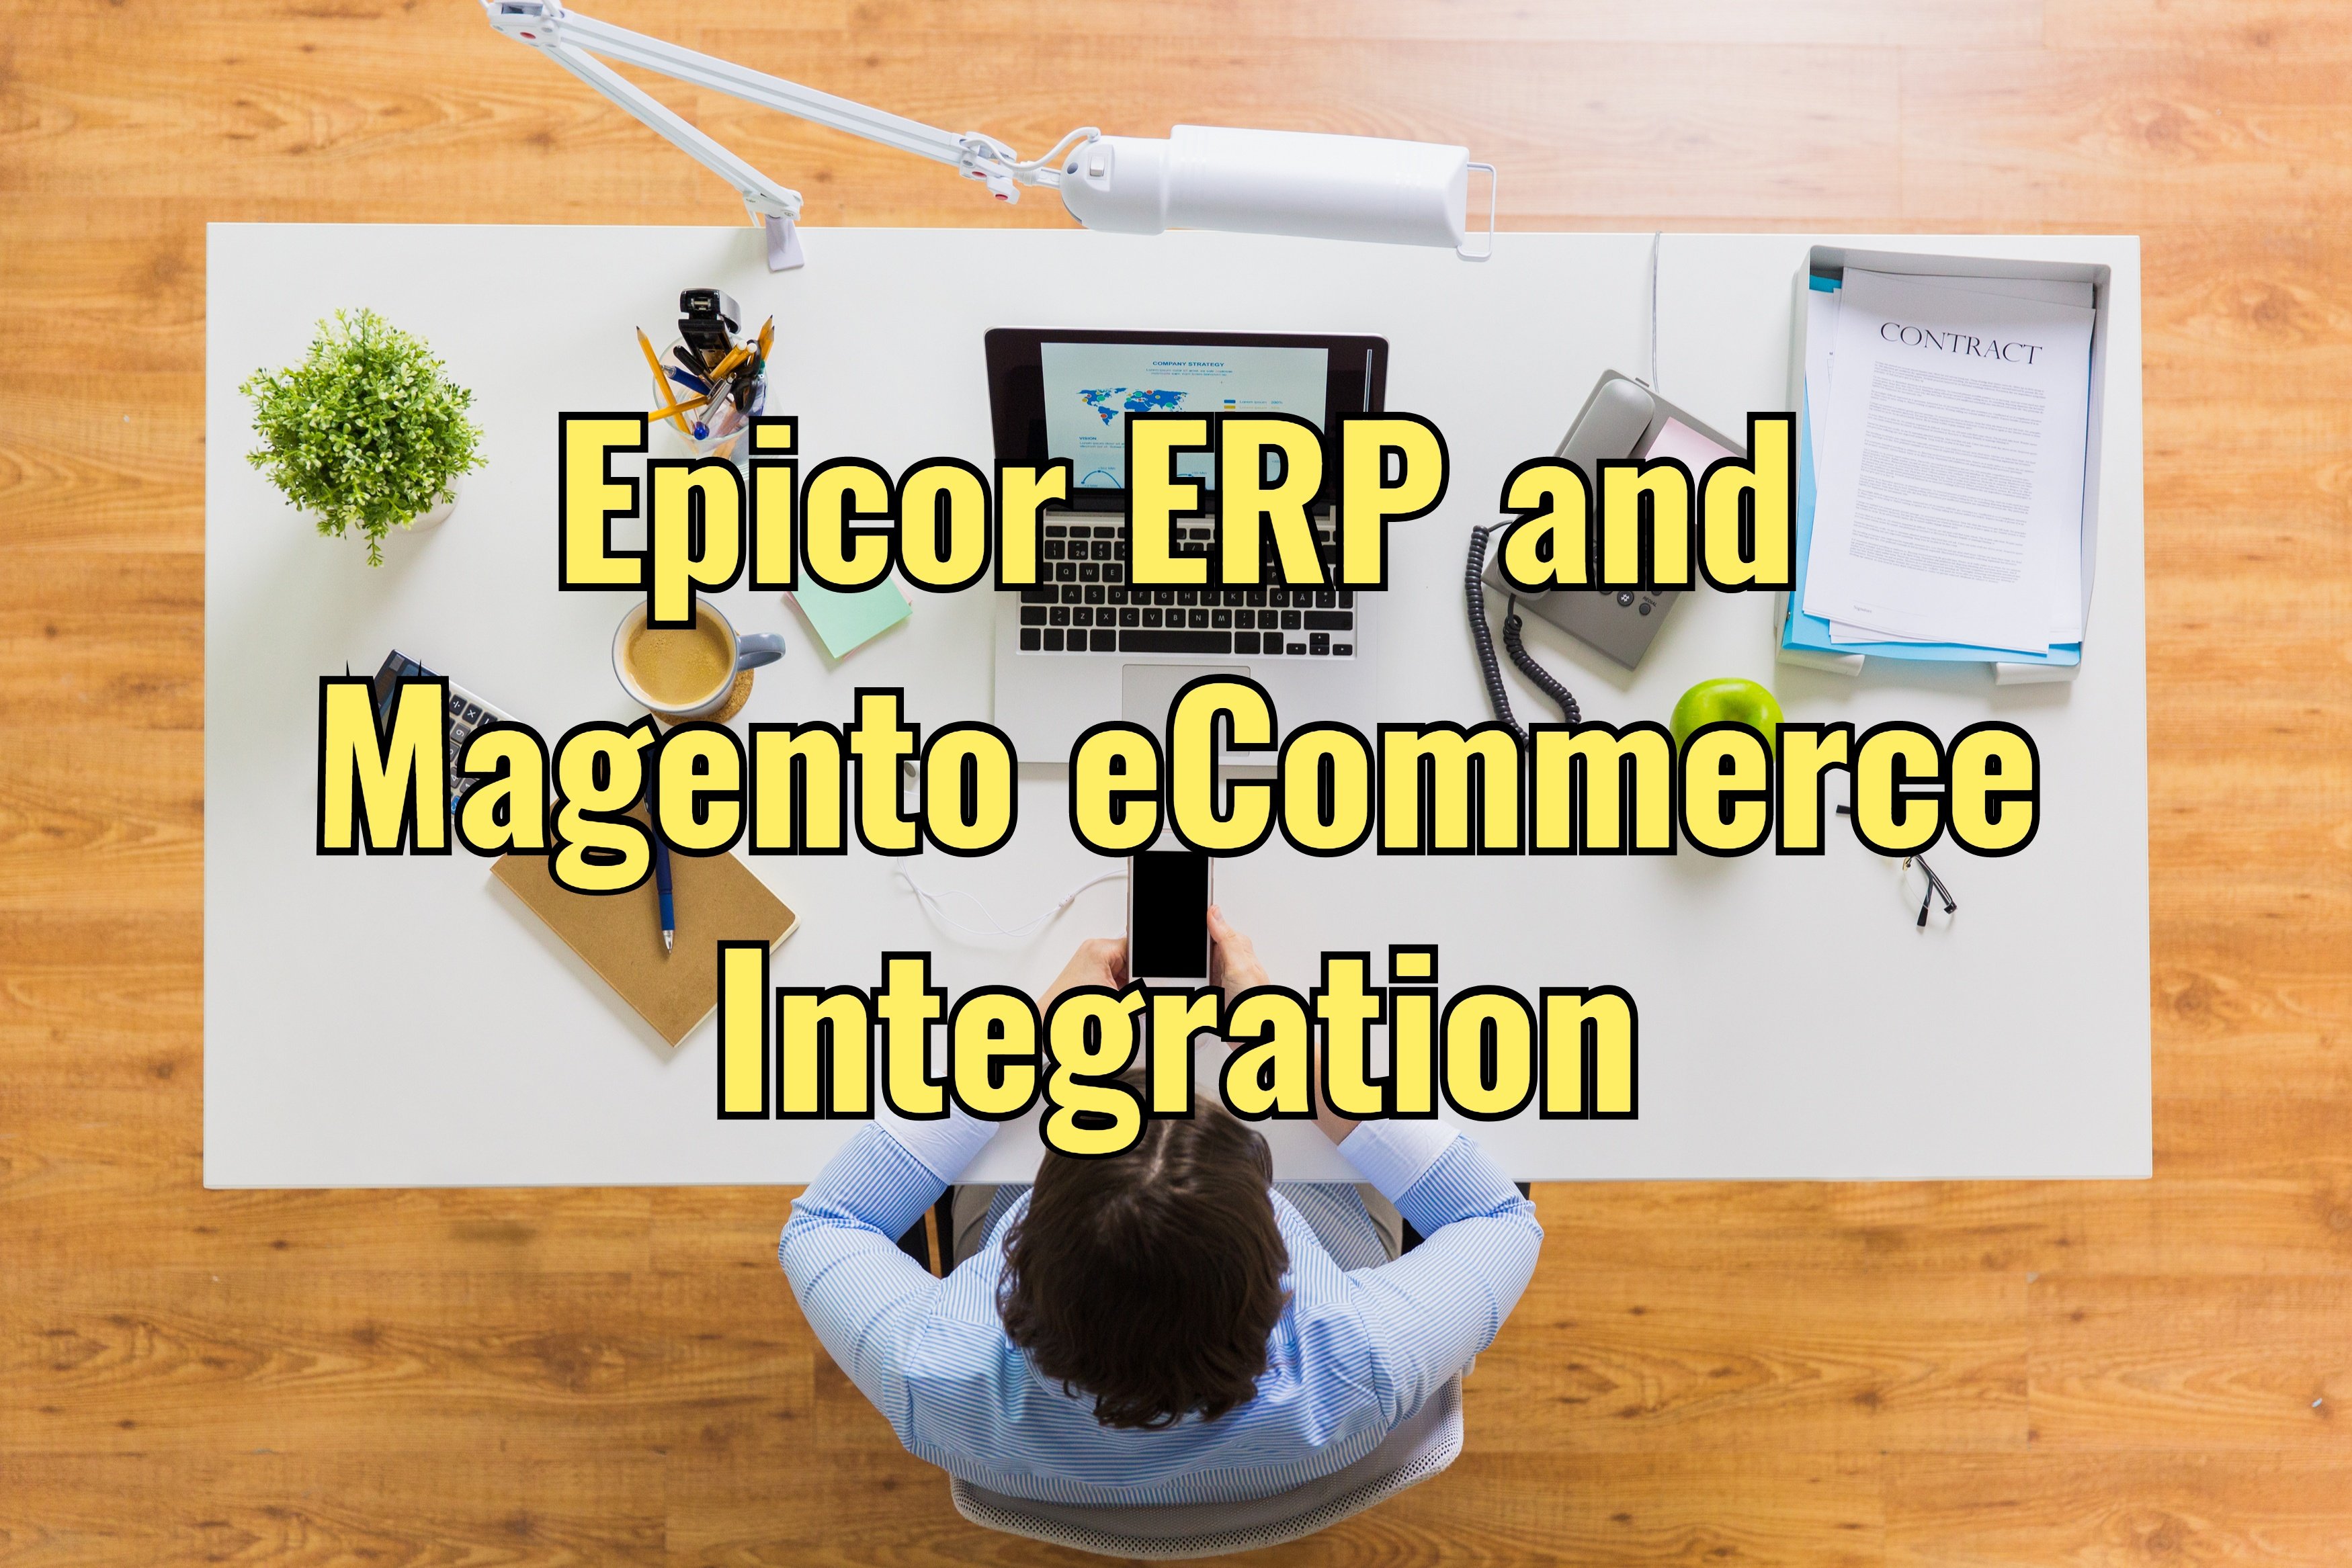 Epicor ERP Magento eCommerce Integration